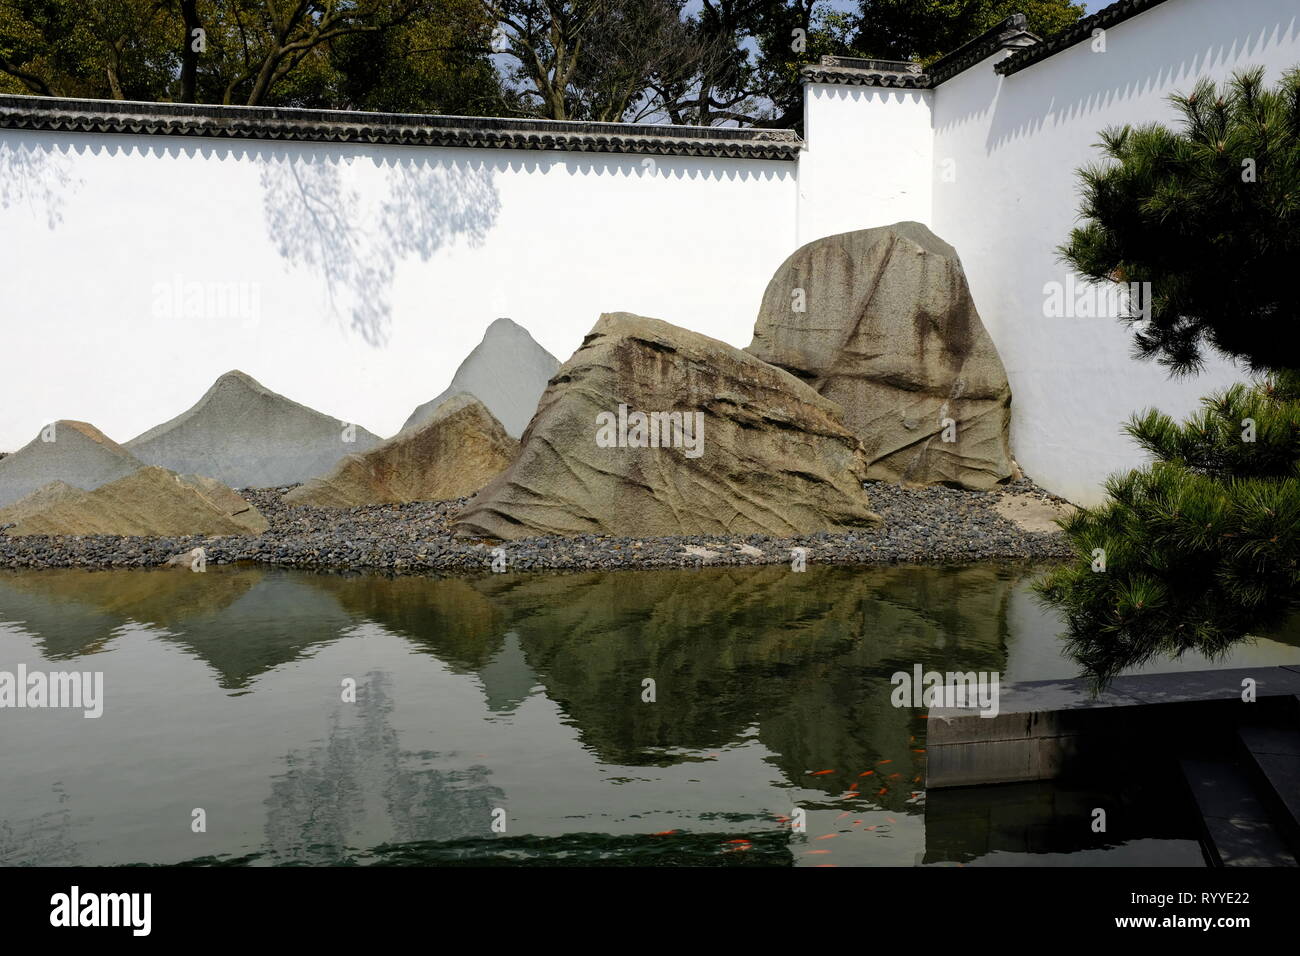 Rockery by the reflecting pool in the garden of Suzhou Museum designed by I.M.Pei. Suzhou.Jiangsu Province.China Stock Photo